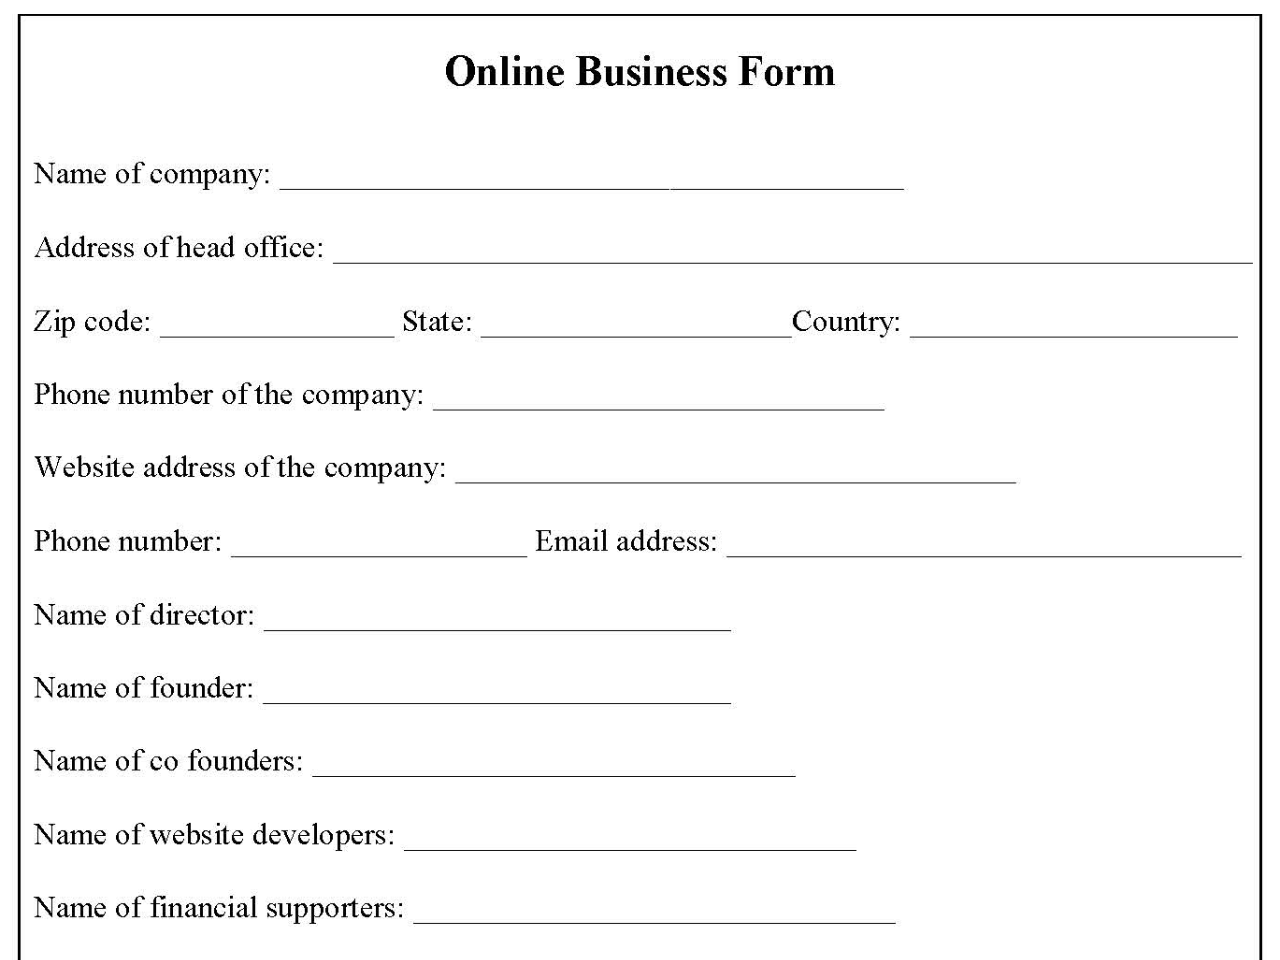 Online Business Form